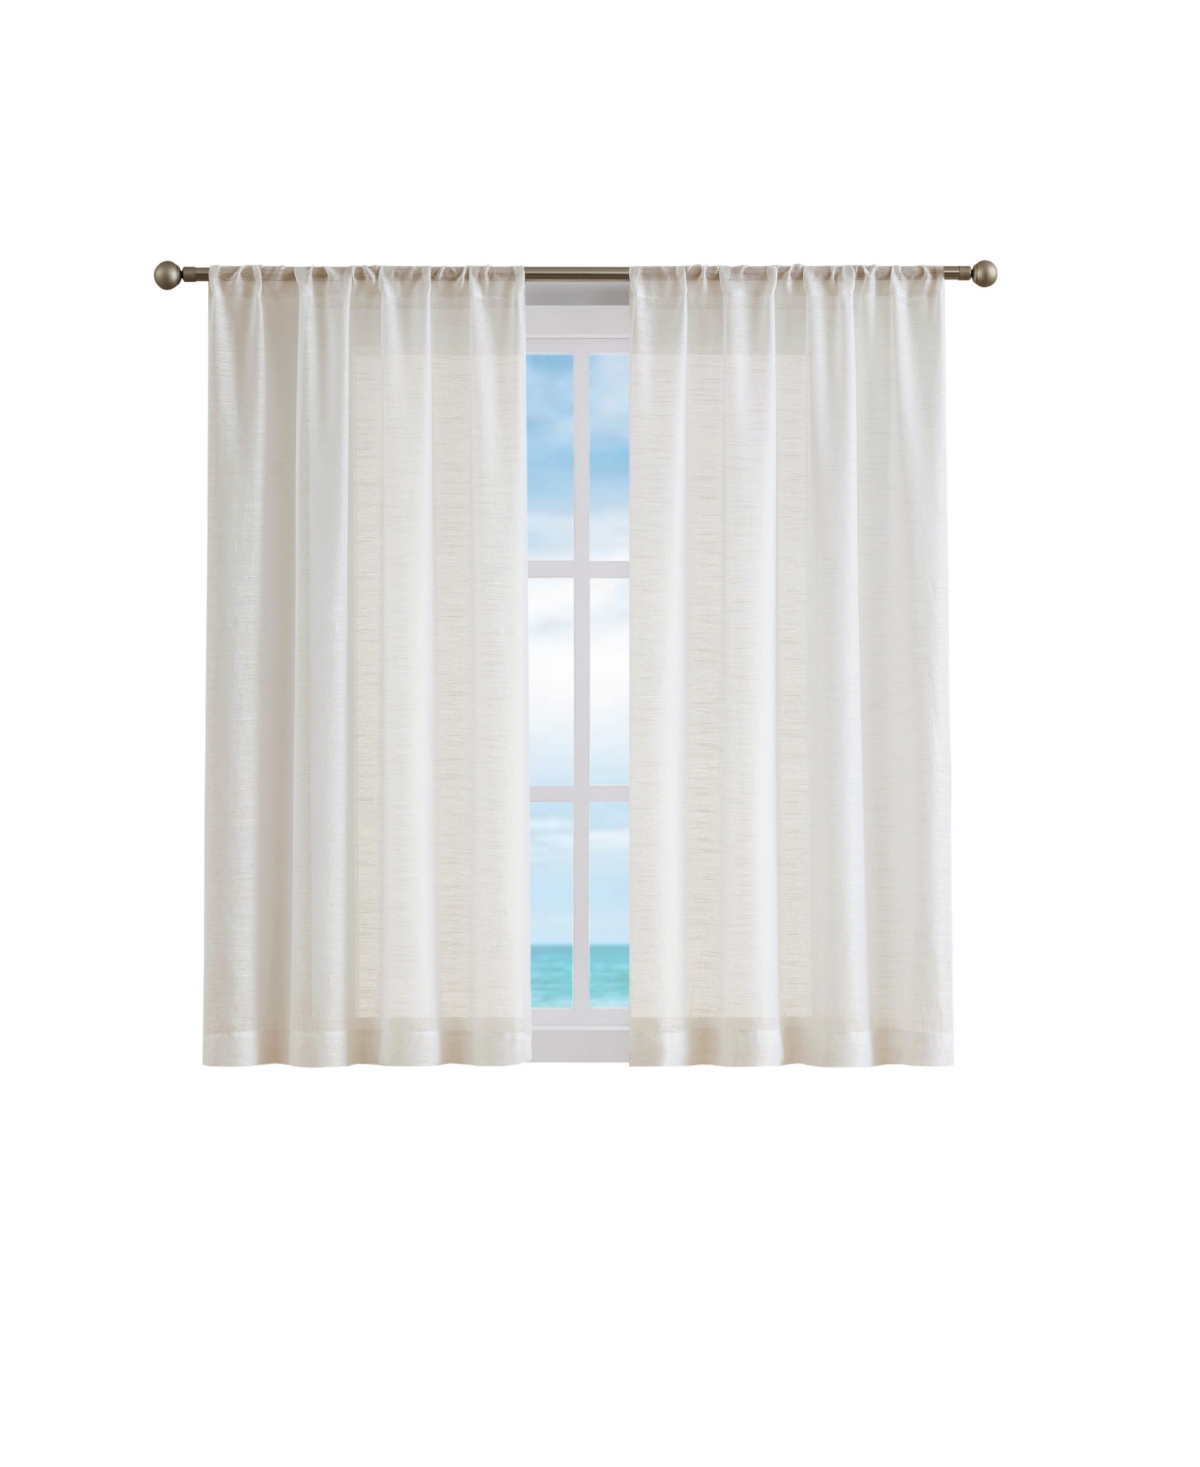 Nautica Erasmus Sheer Rod Pocket Window Curtain Panel Pair, 38" X 63" In Taupe